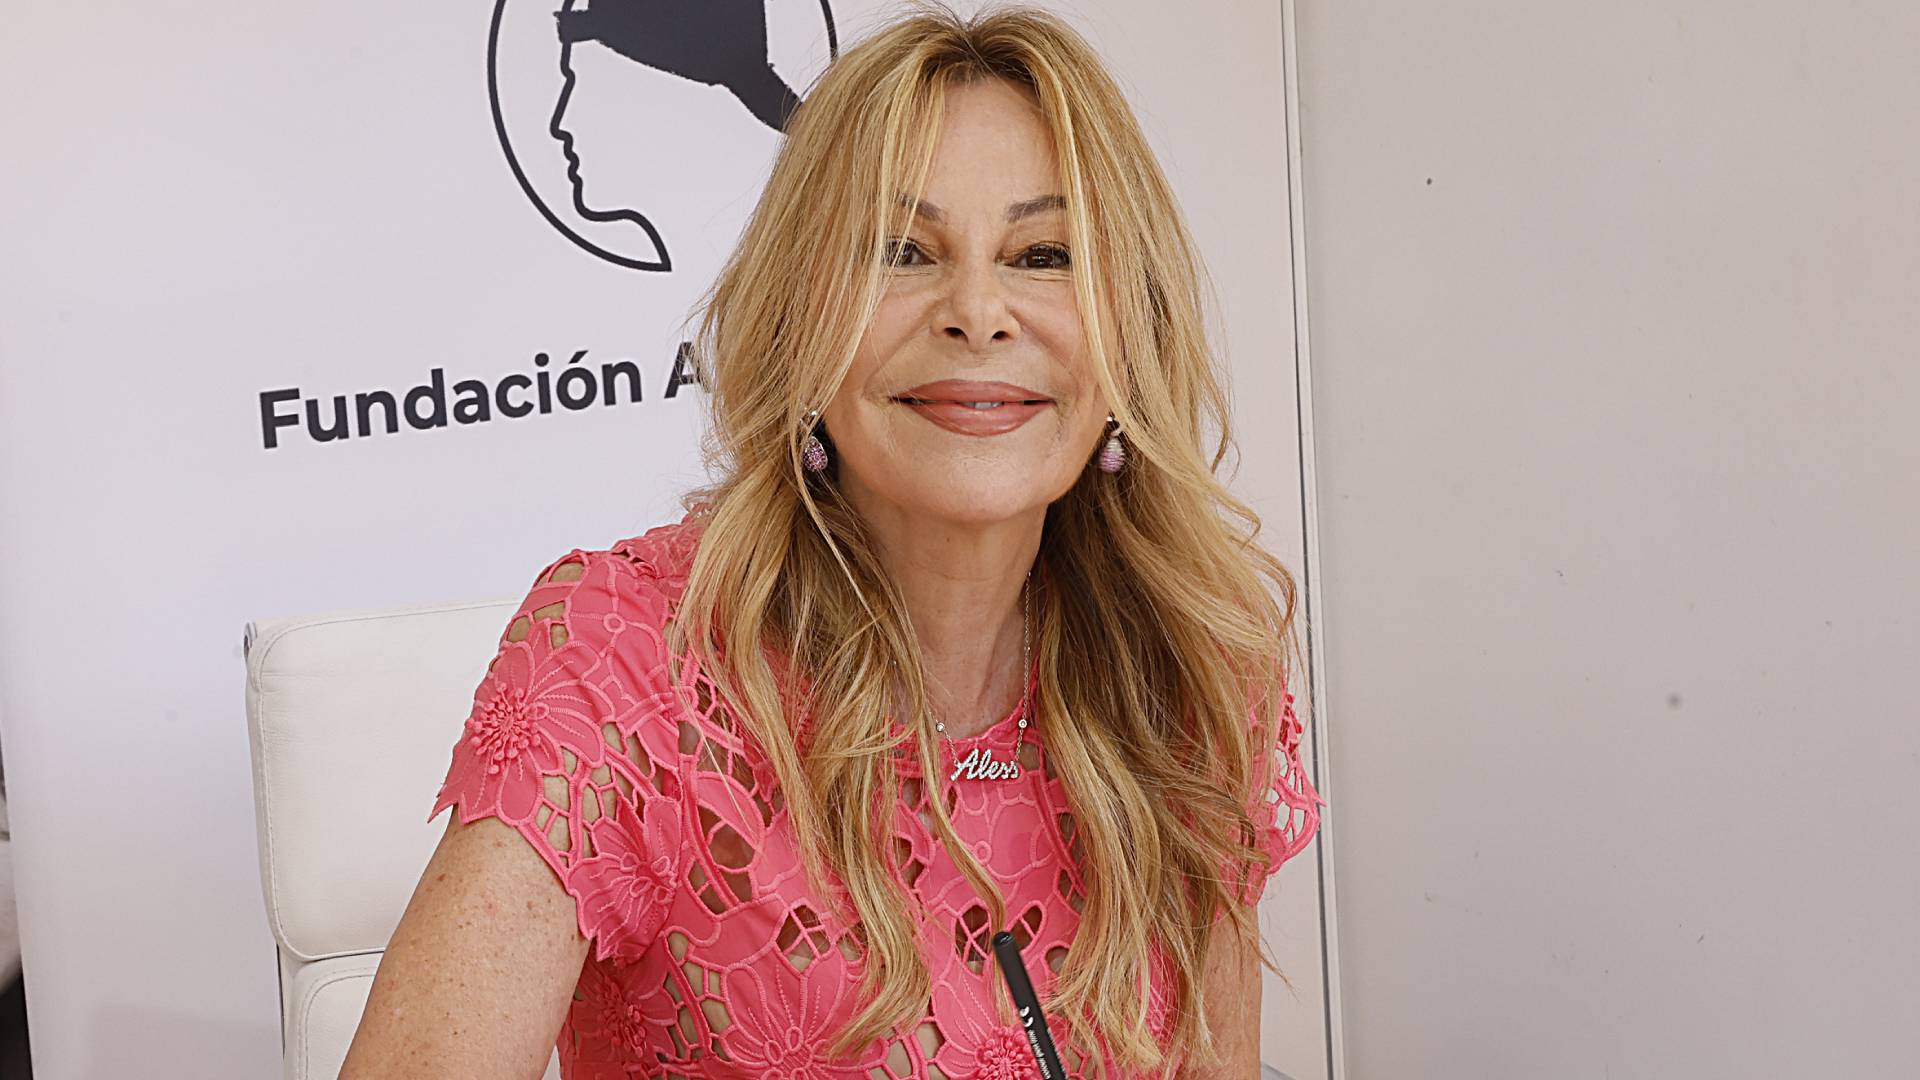 Ana Obregon